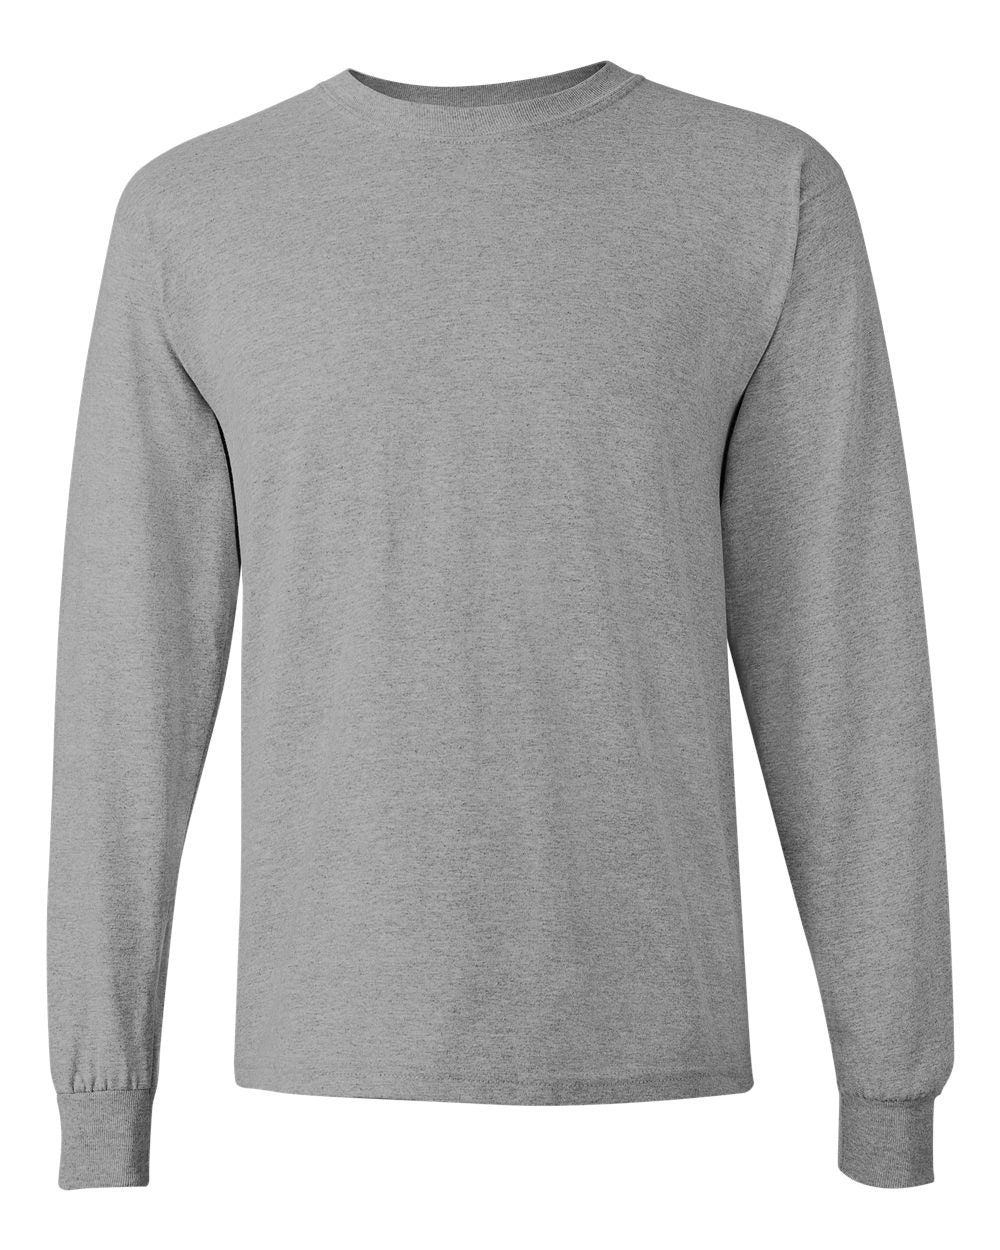 Pretreated Gildan 5400 Heavy Cotton Long Sleeve T-Shirt - Sport Grey